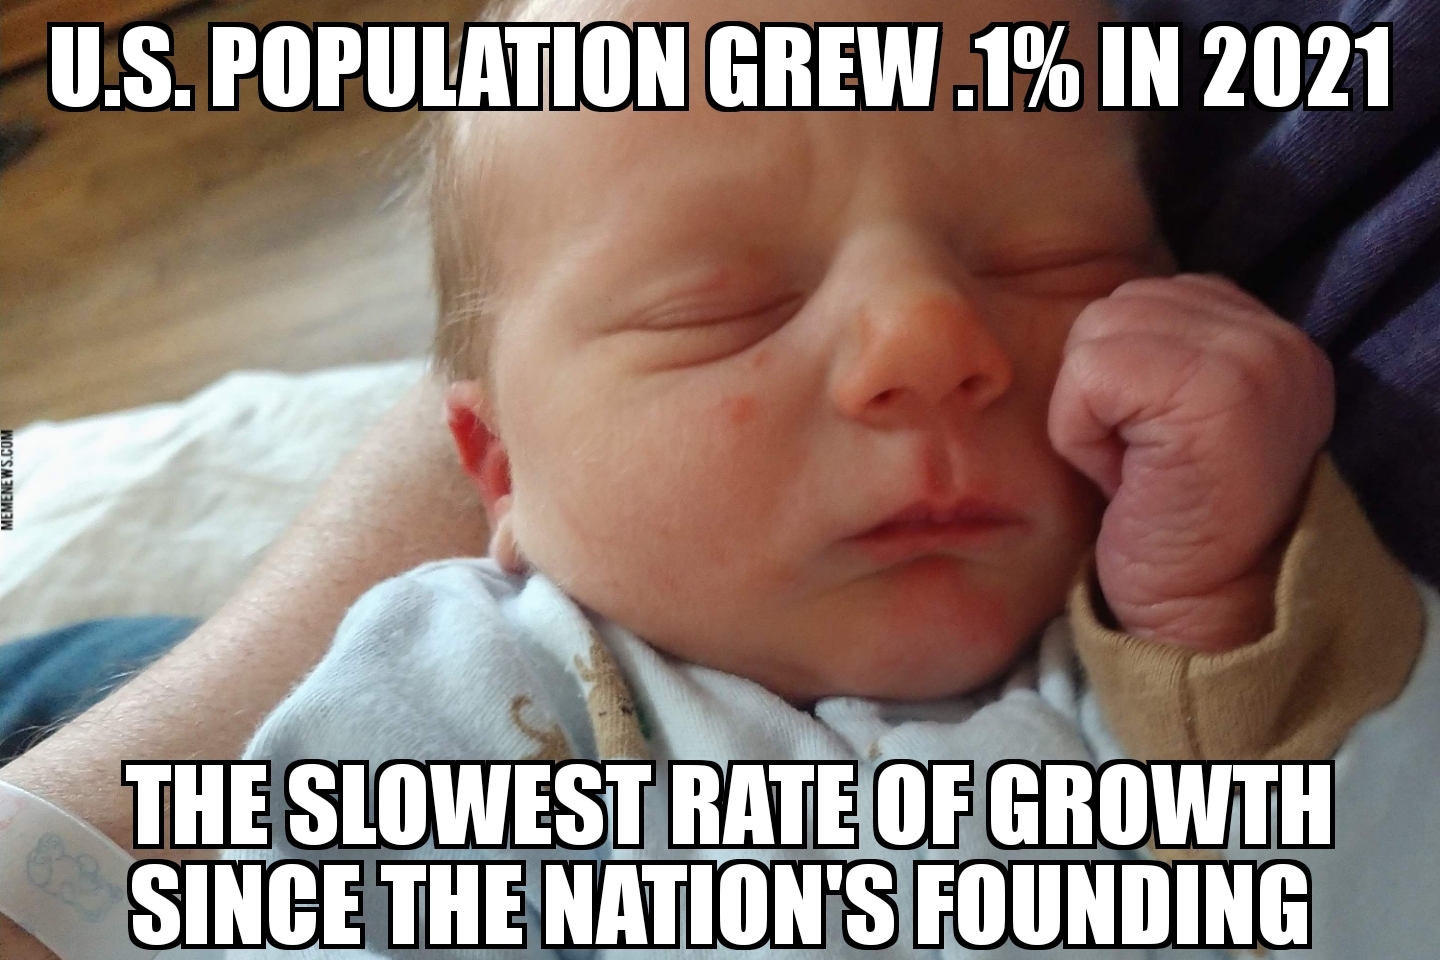 Record low U.S. population growth